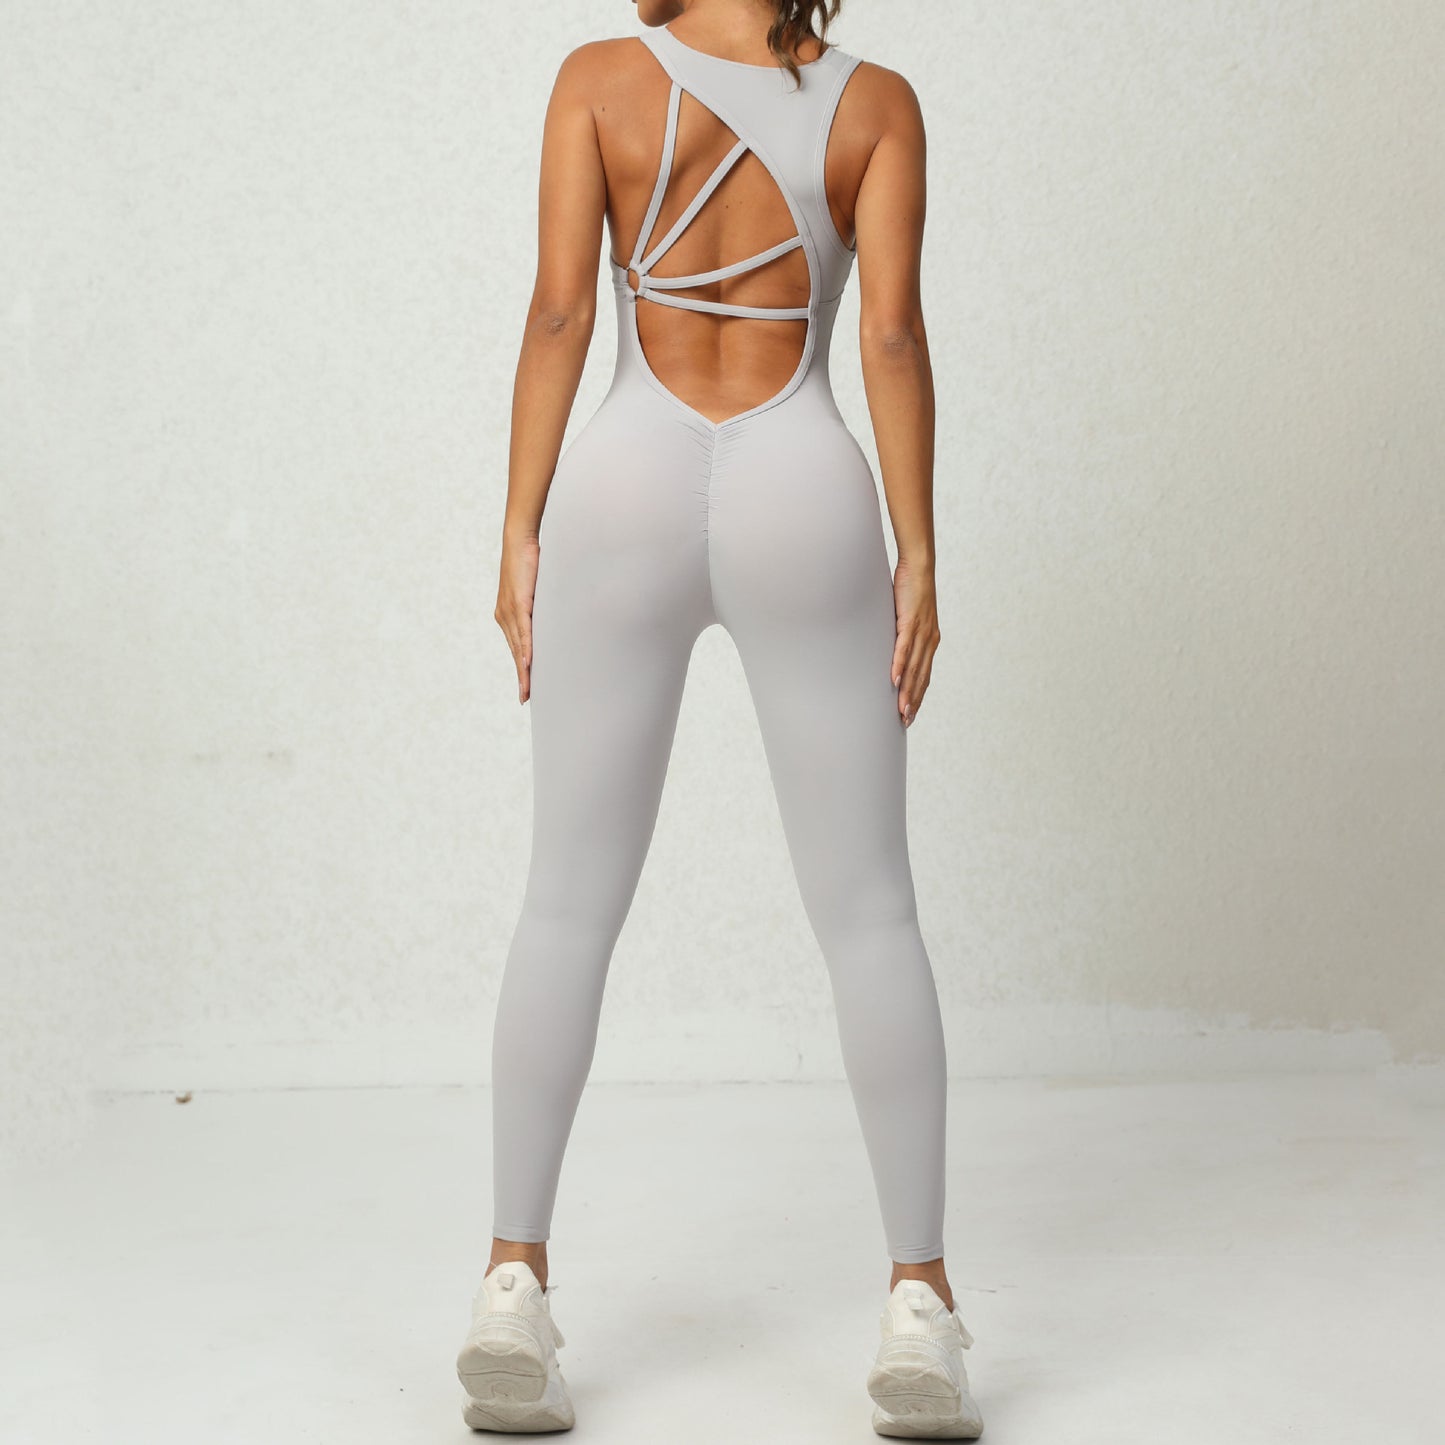 Yoga-Overall mit V-förmigem Rückendesign, ärmellos, Fitness, Laufsportbekleidung, Stretch-Strumpfhose für Damenbekleidung